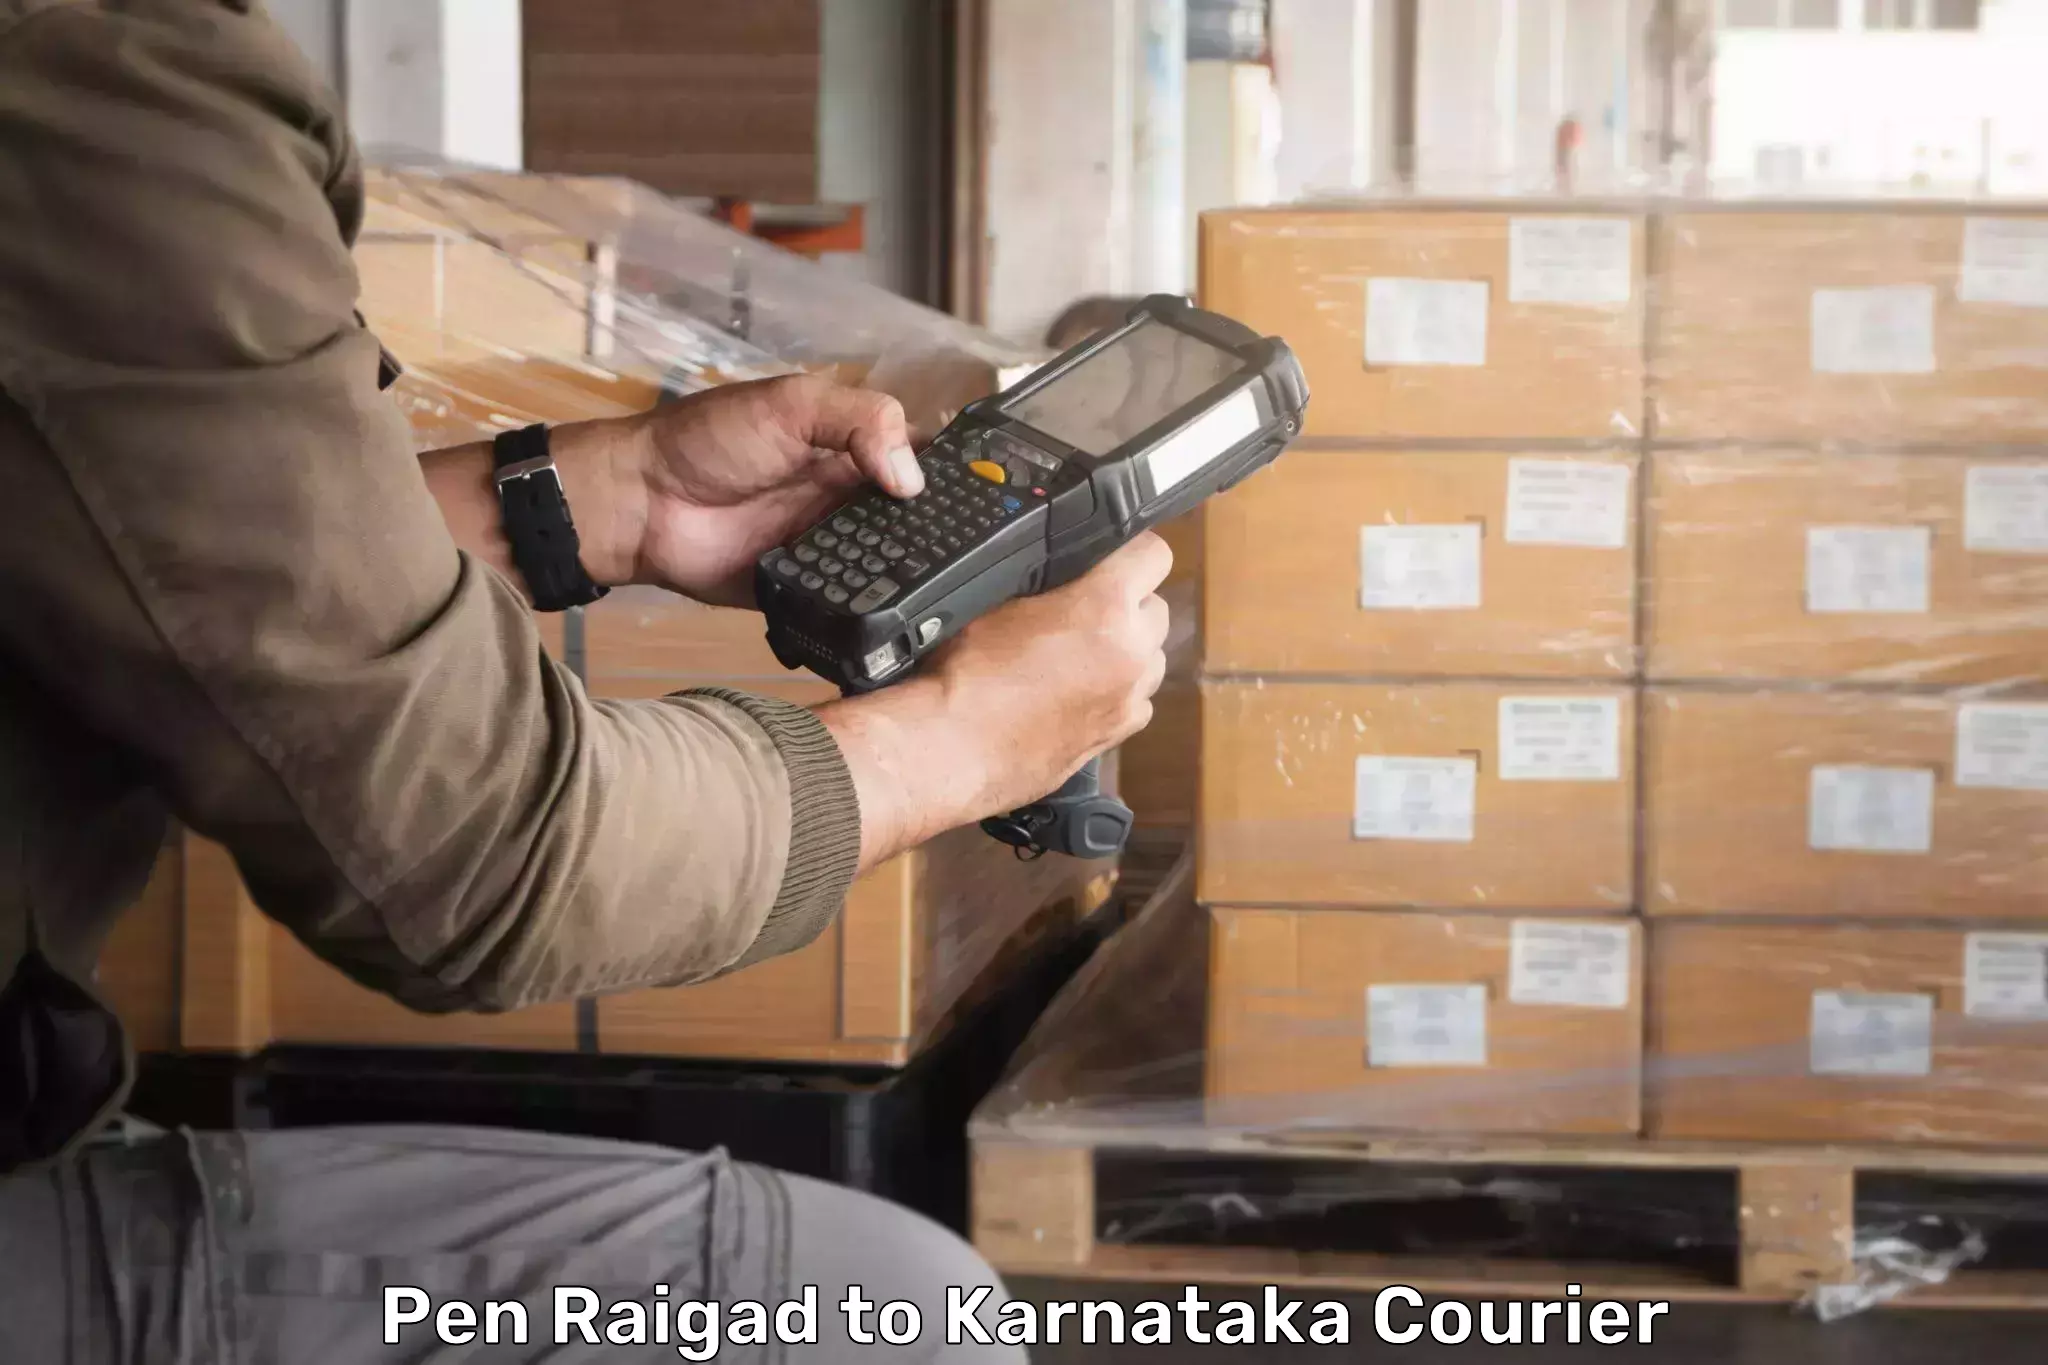 Courier service efficiency in Pen Raigad to Karnataka